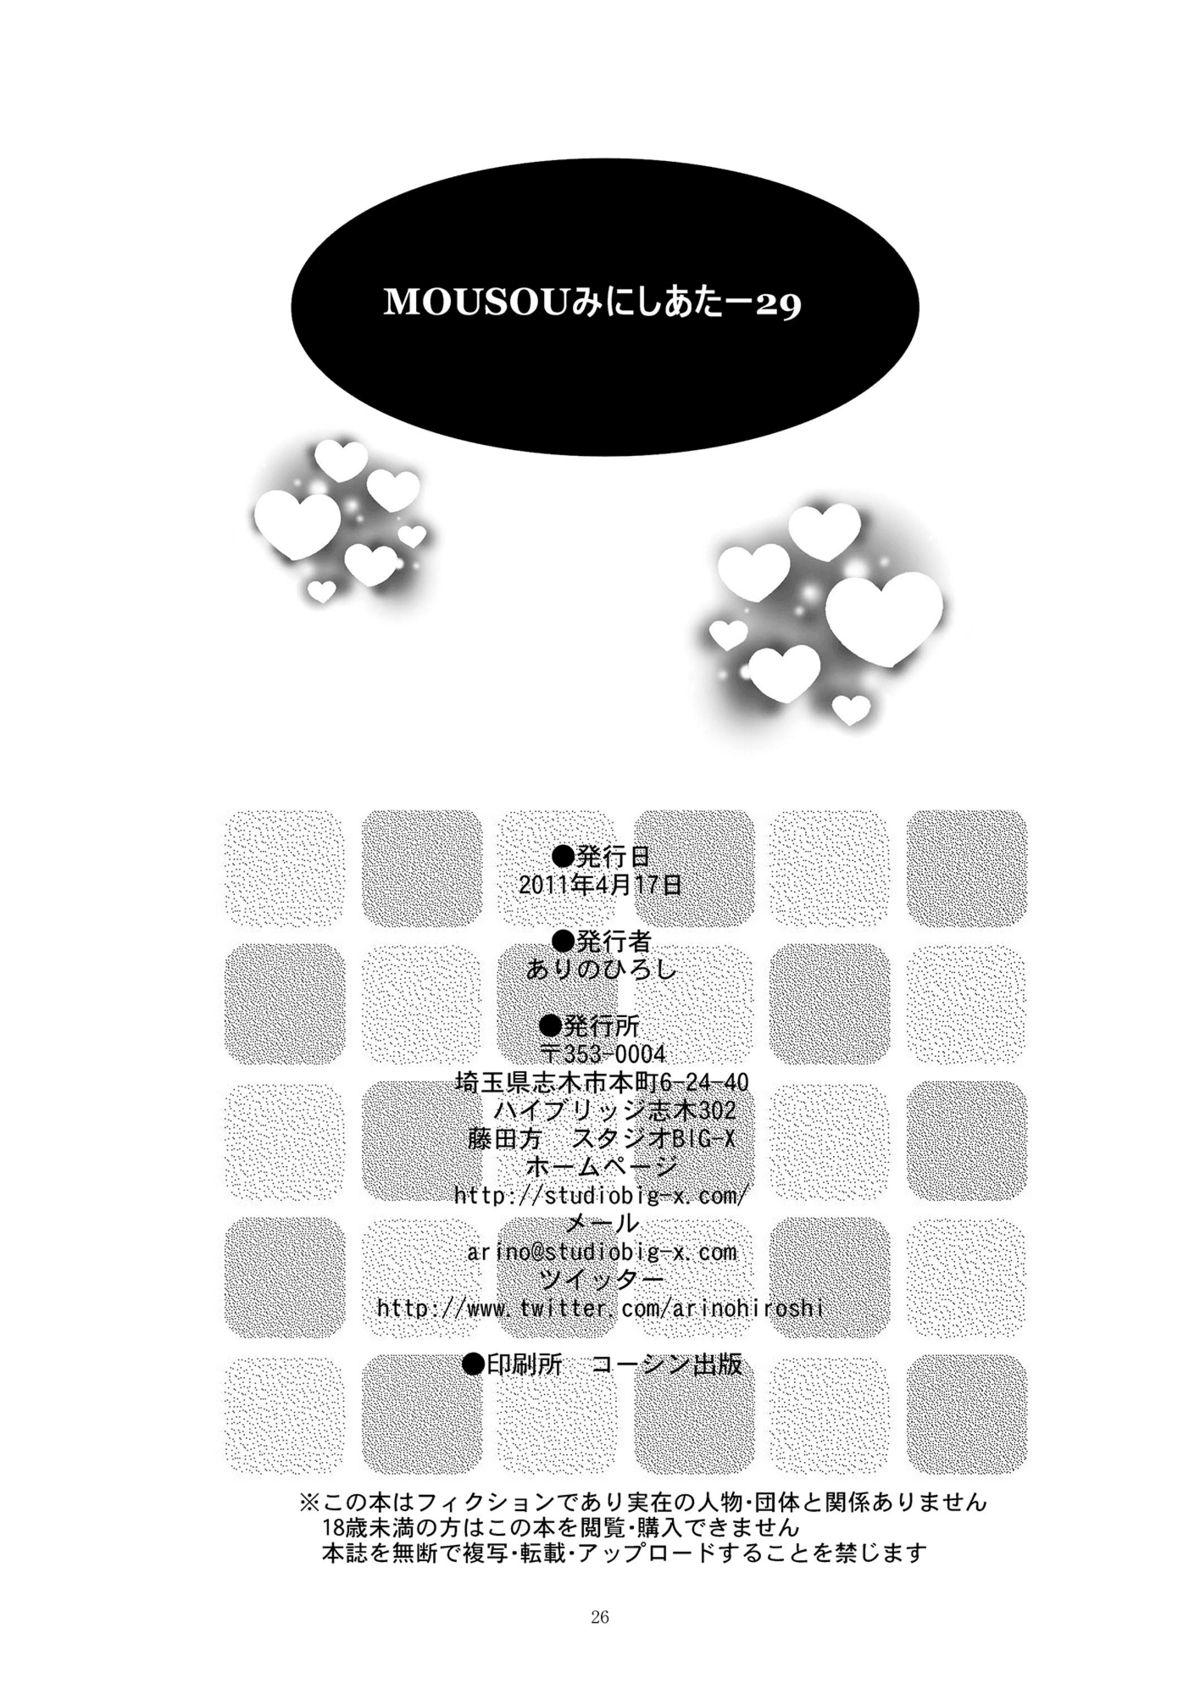 MOUSOU Mini Theater 29 25